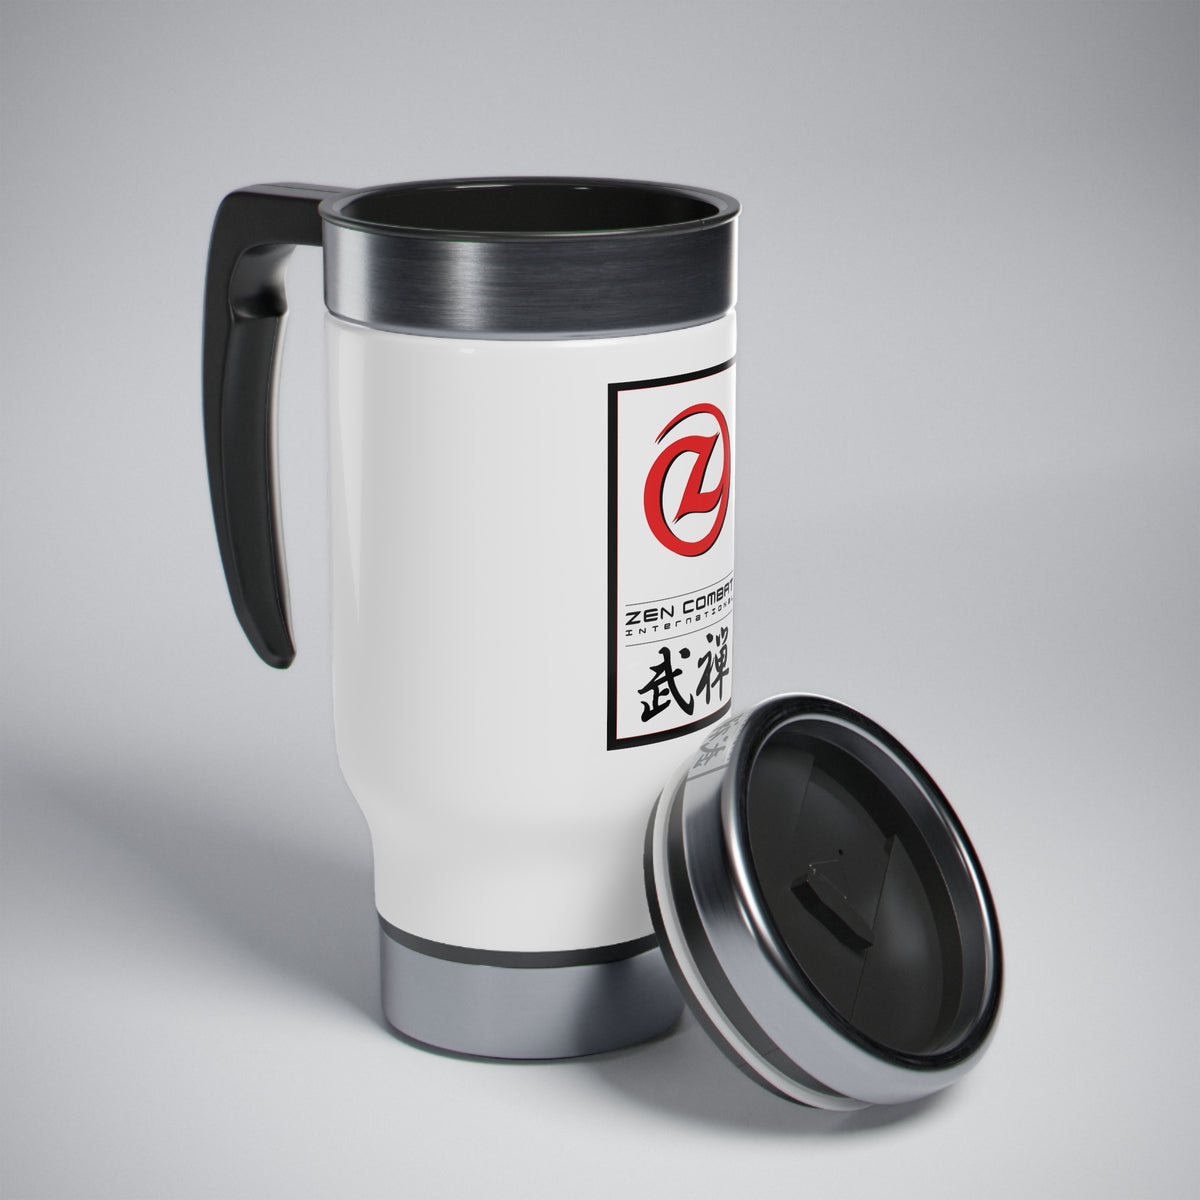 Zen Combat Stainless Steel Travel Mug with Handle, 14oz